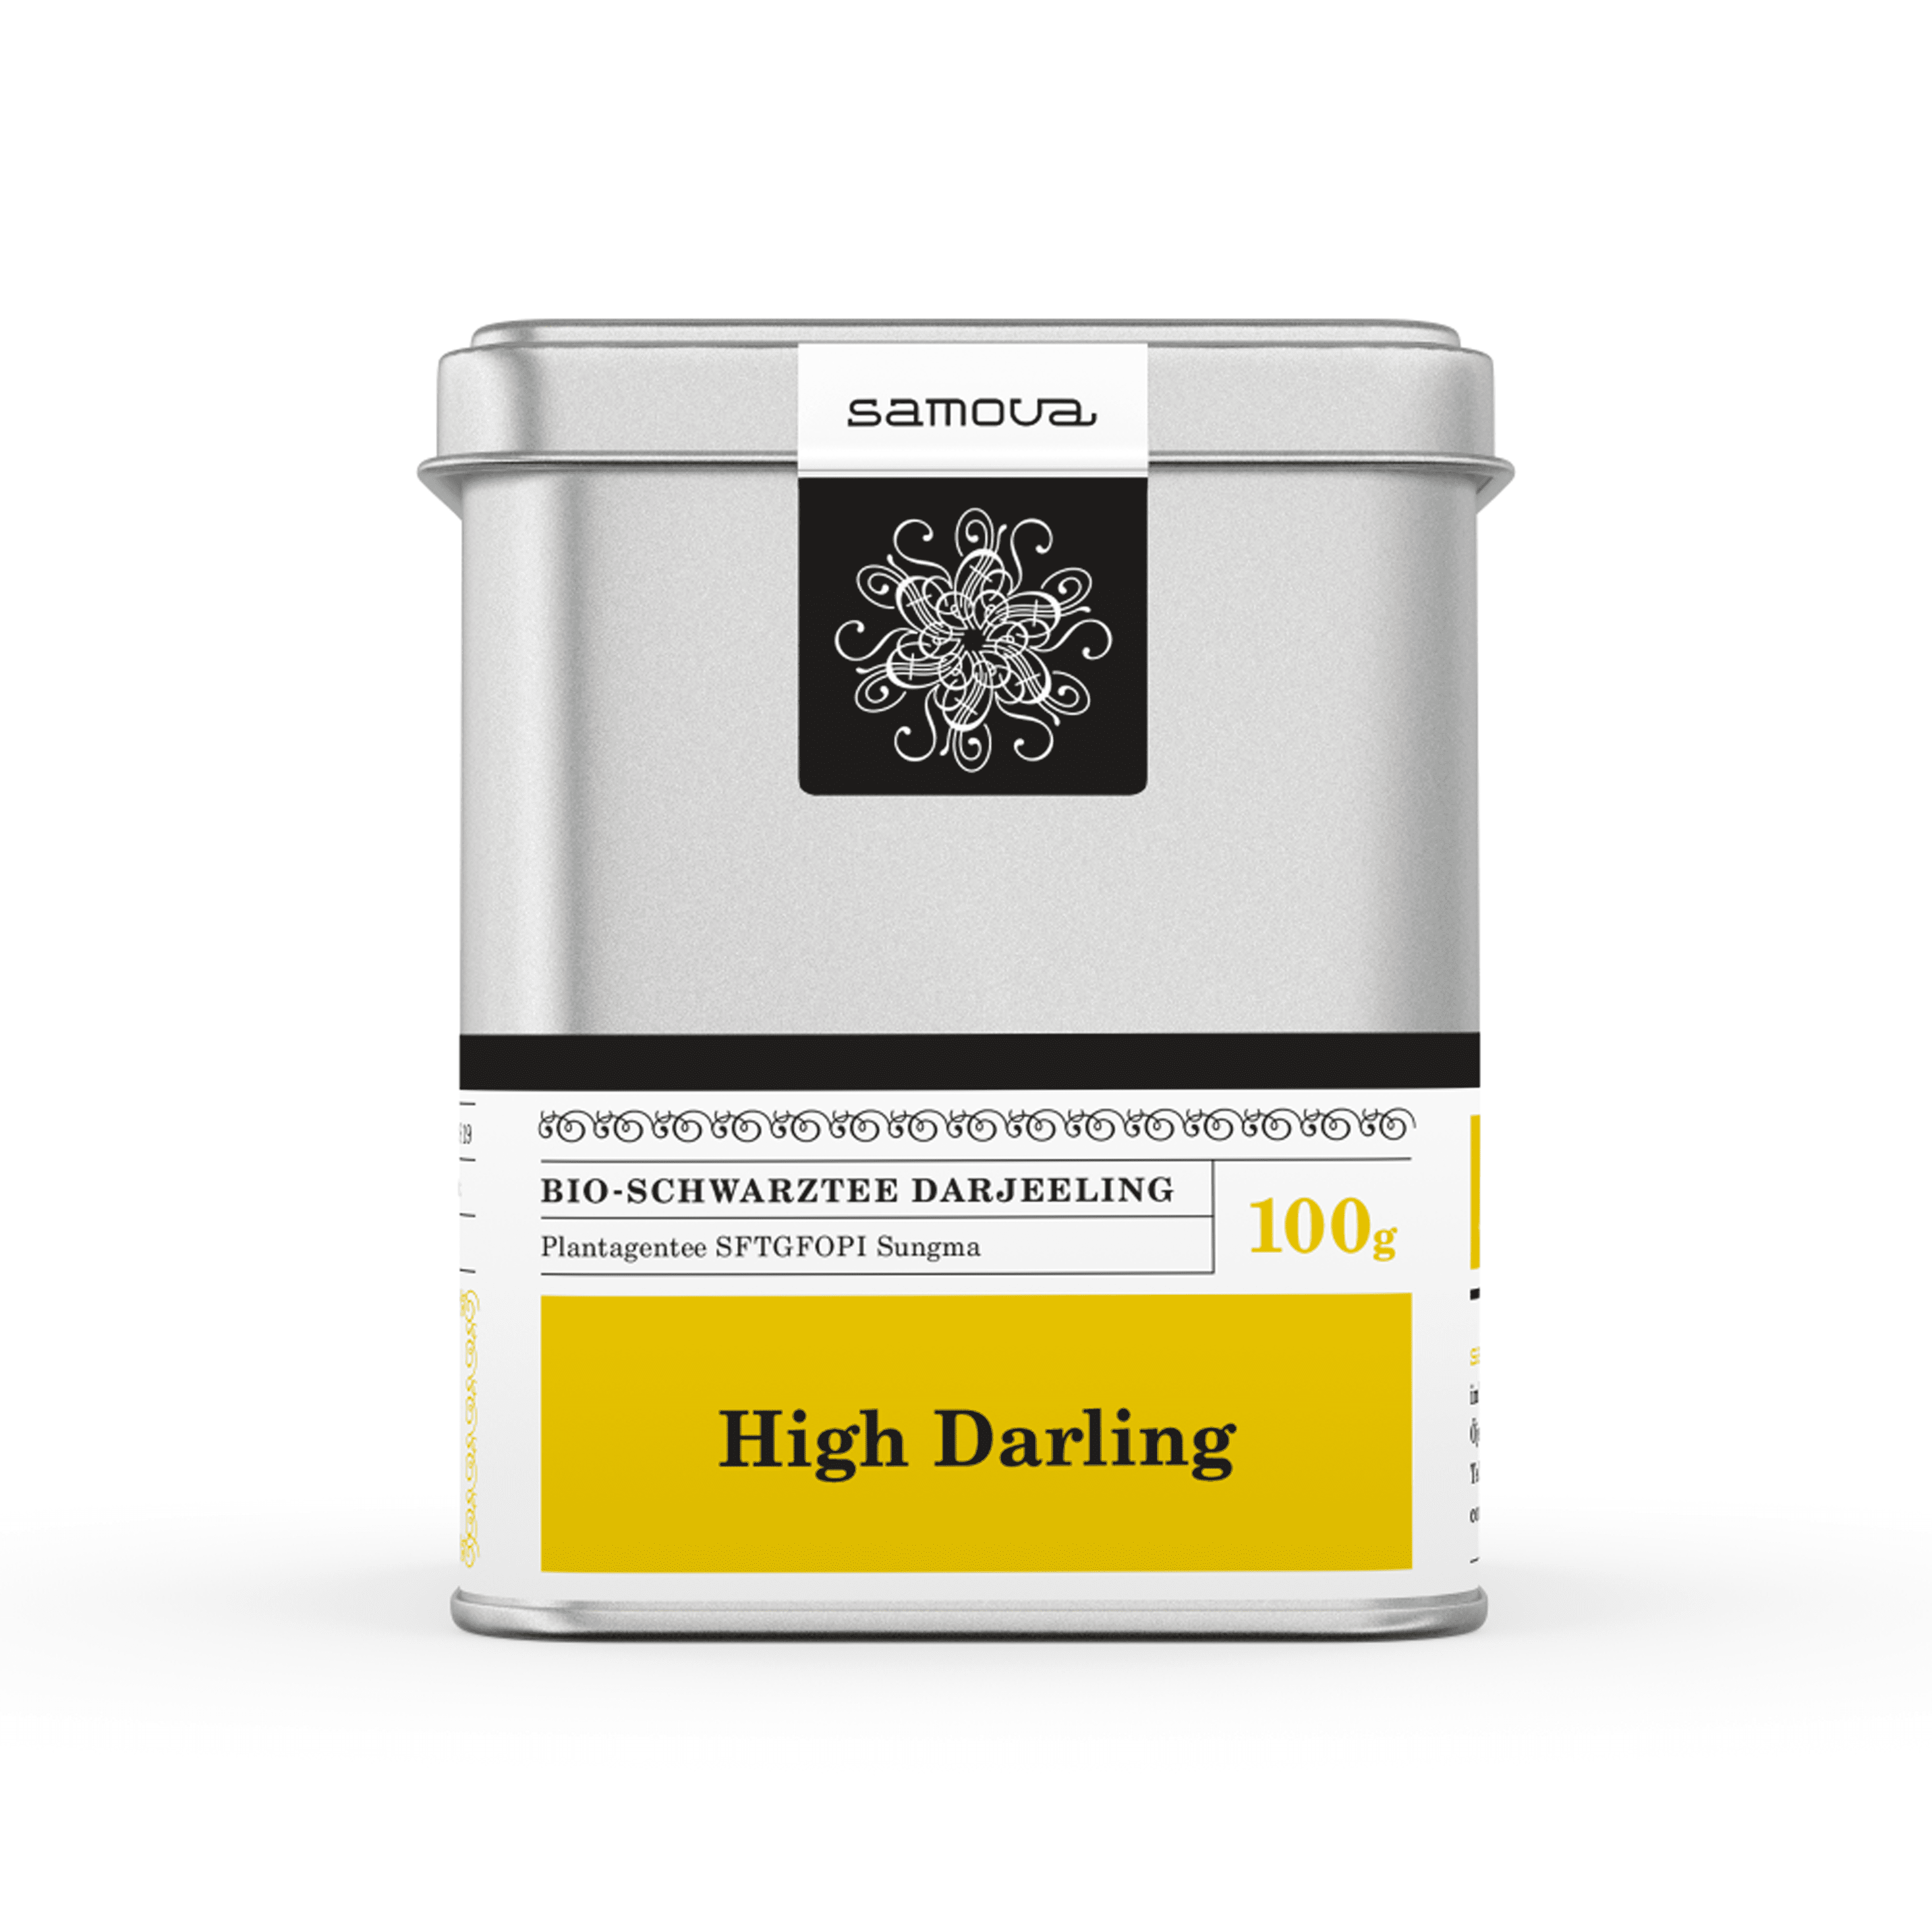 Dose der Teesorte High Darling